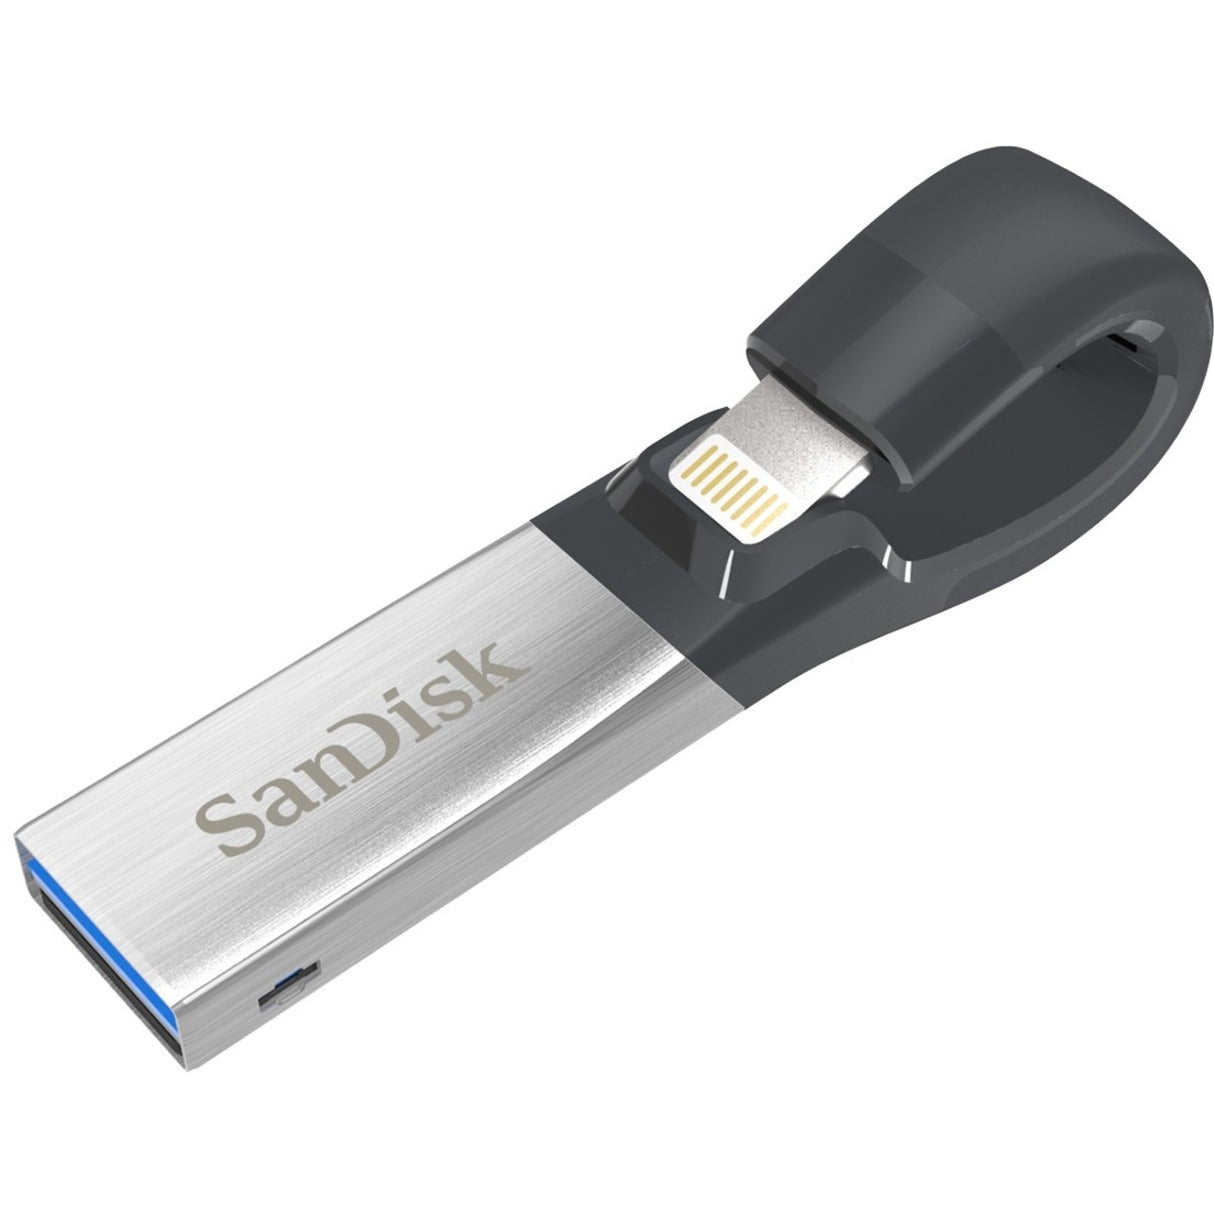 SanDisk SDIX30C-128G-AN6NE iXpand Flash Drive 128GB, USB 3.0, Password Protection